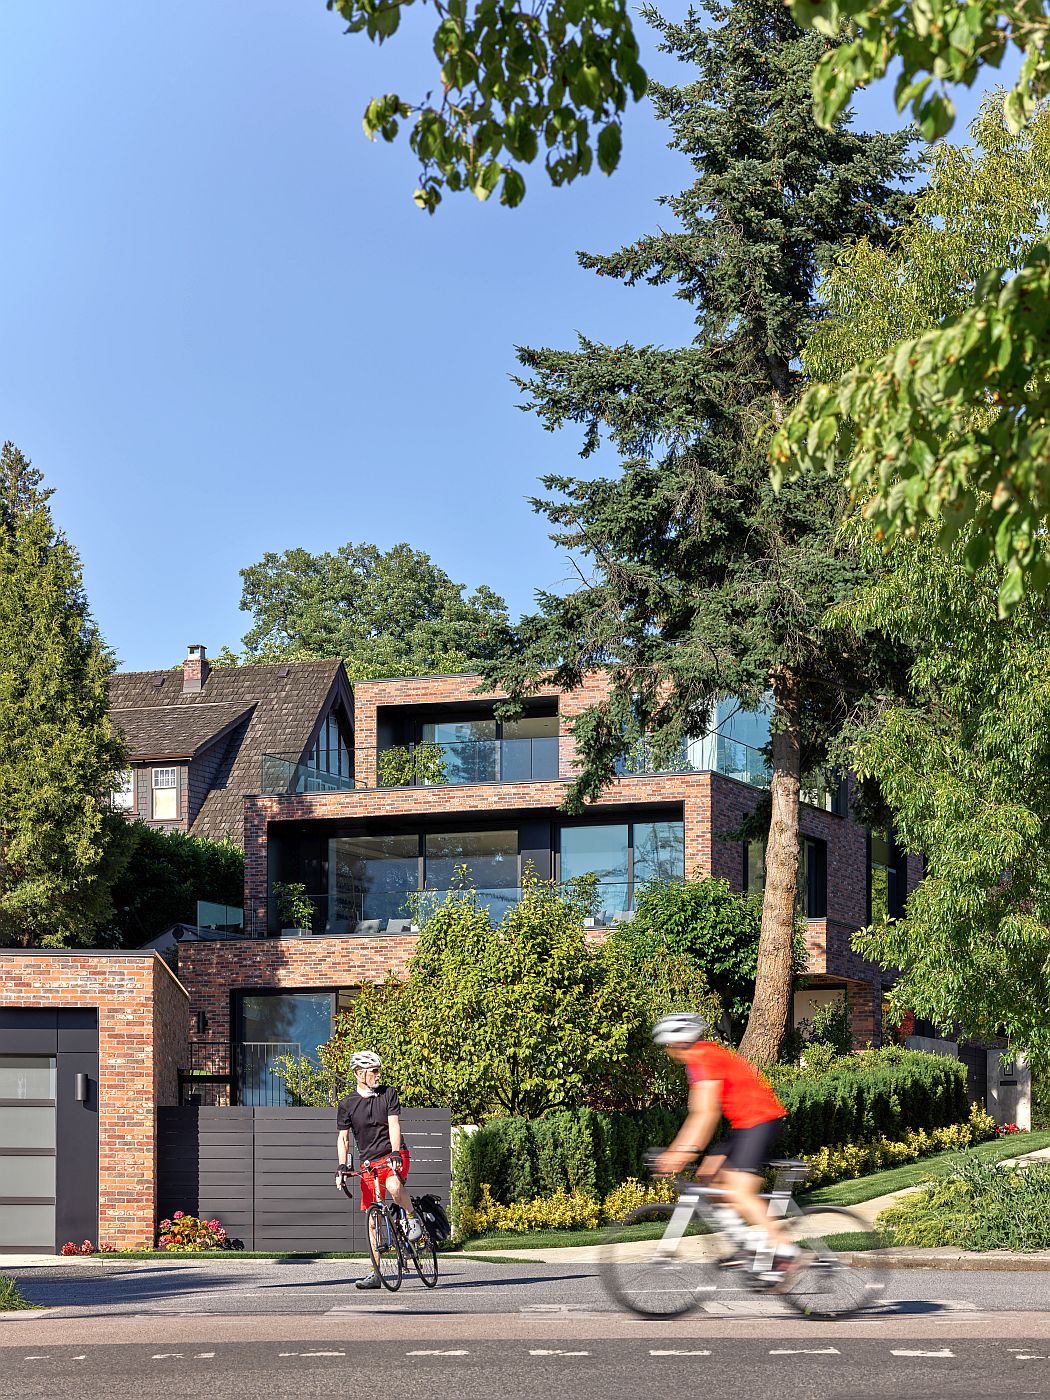 The Nanton Residence by BLA Design Group